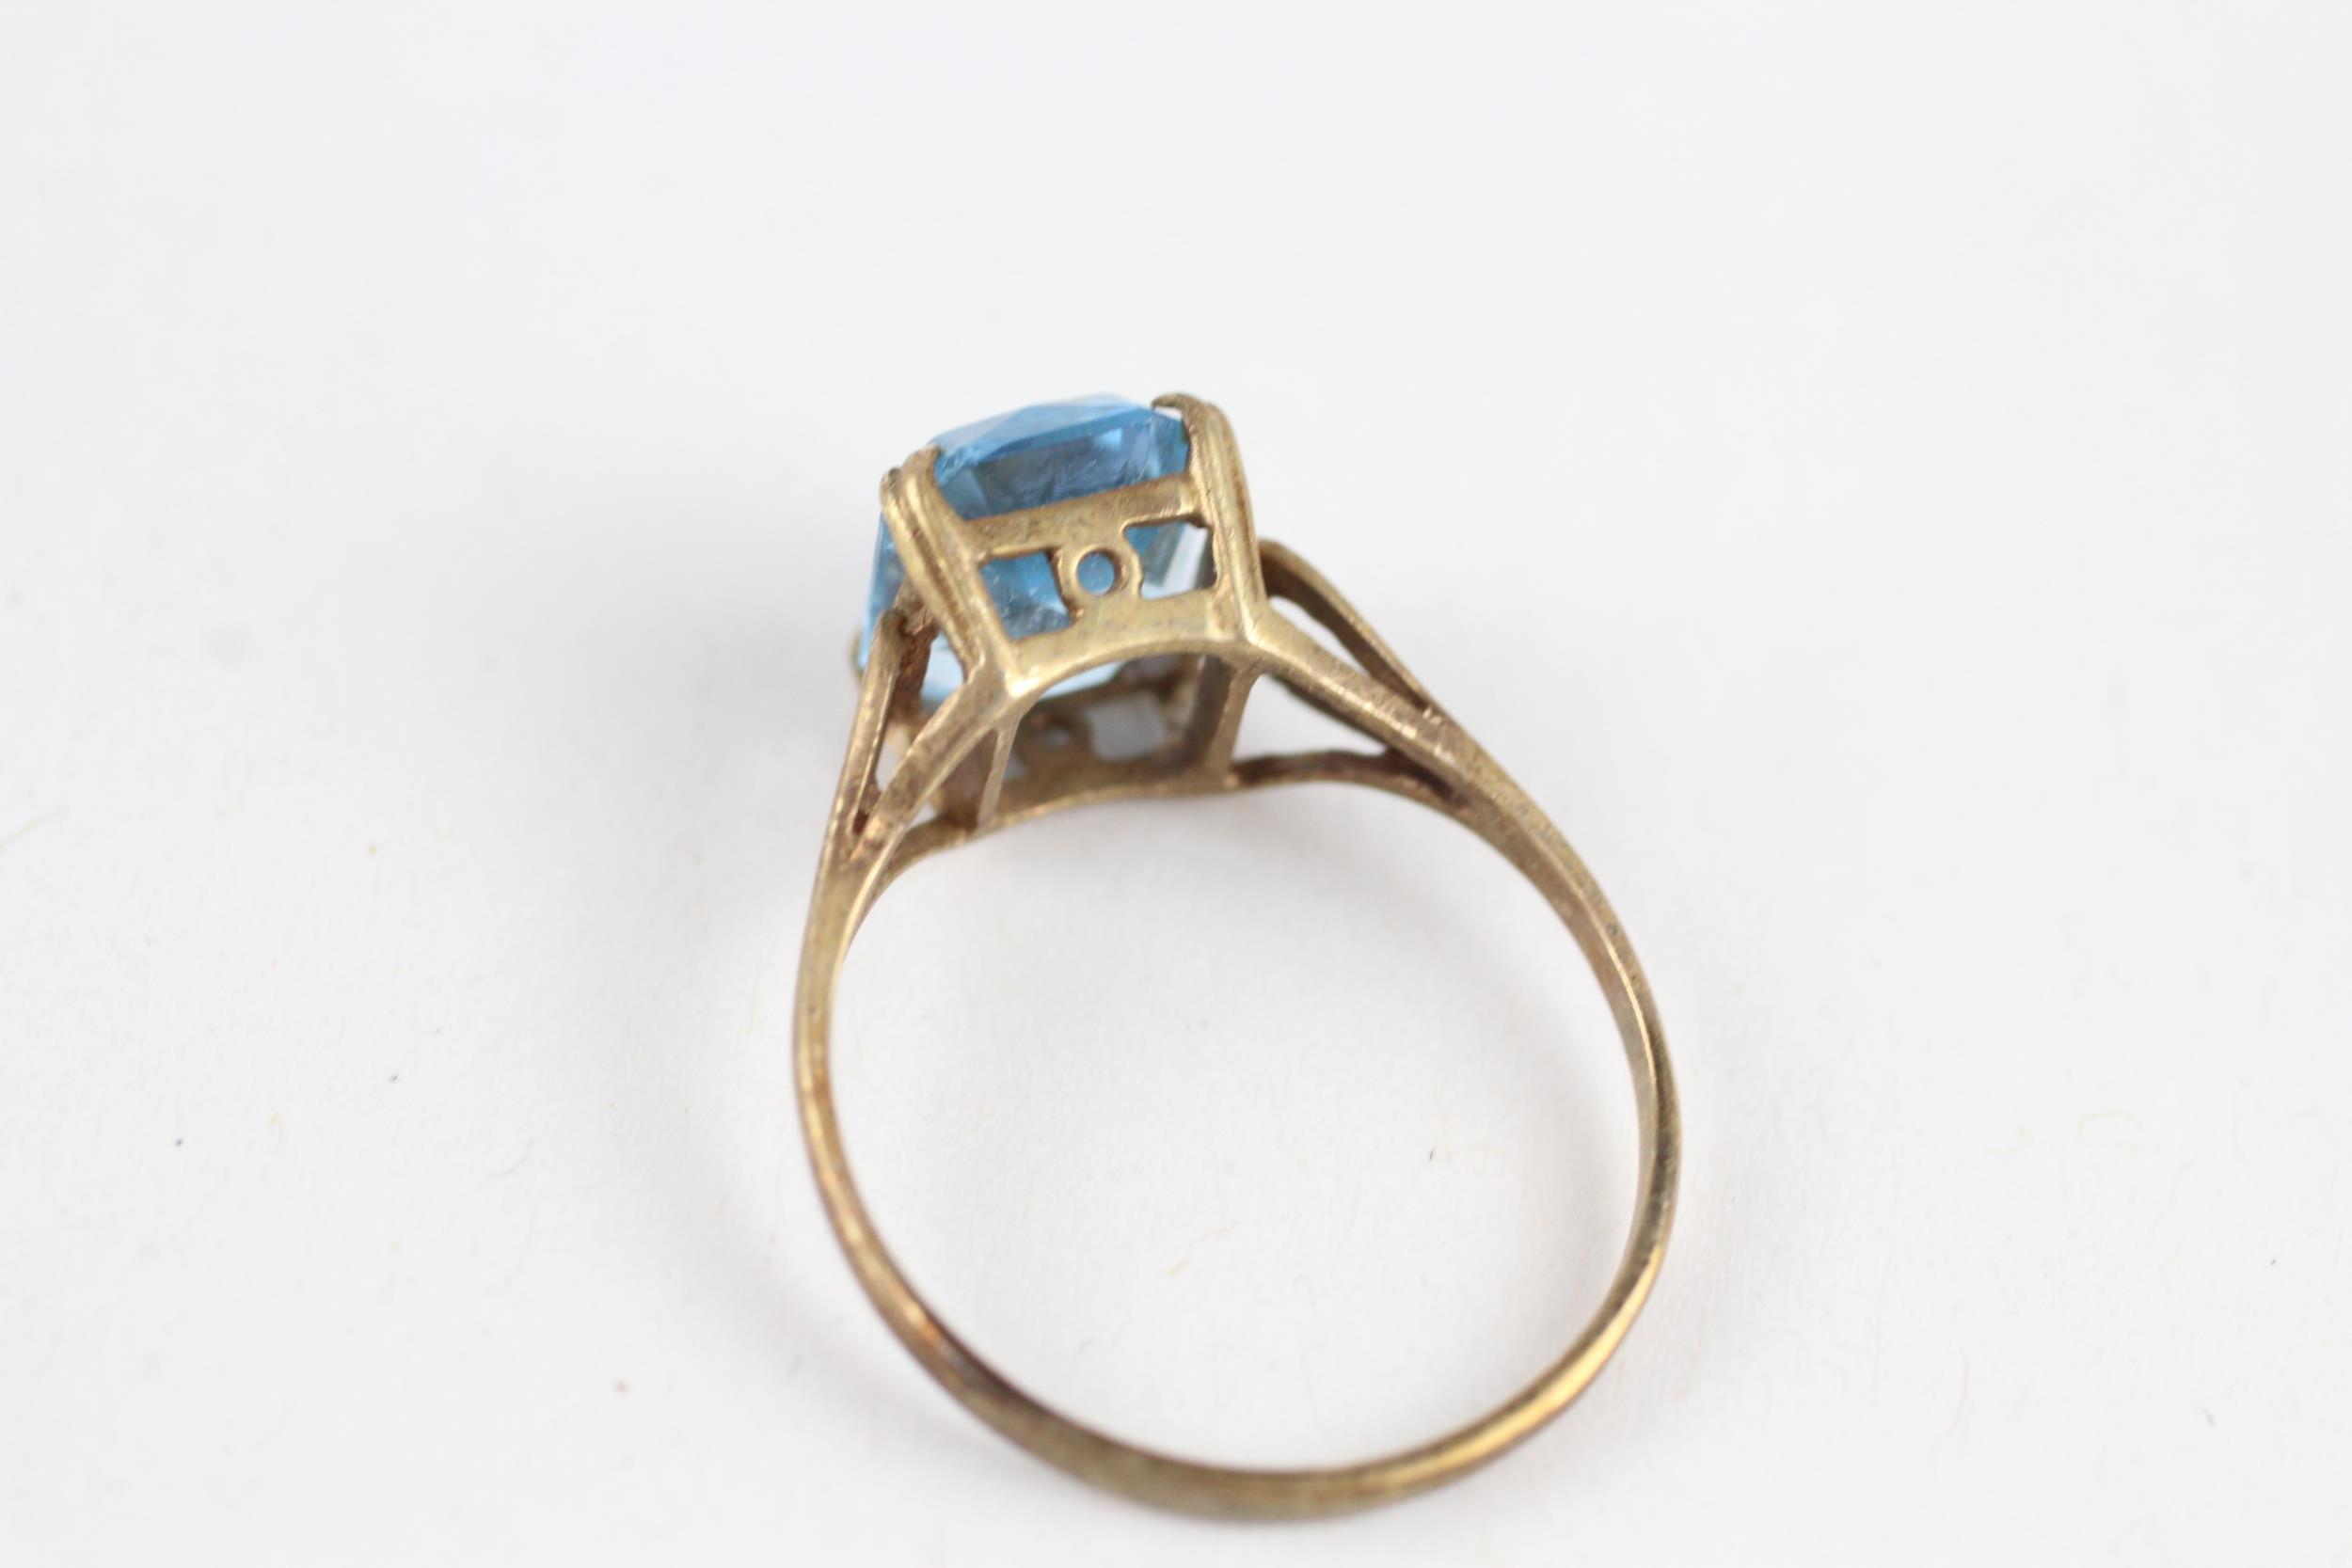 9ct gold vintage blue paste dress ring Size P - 2.2 g - Image 4 of 4